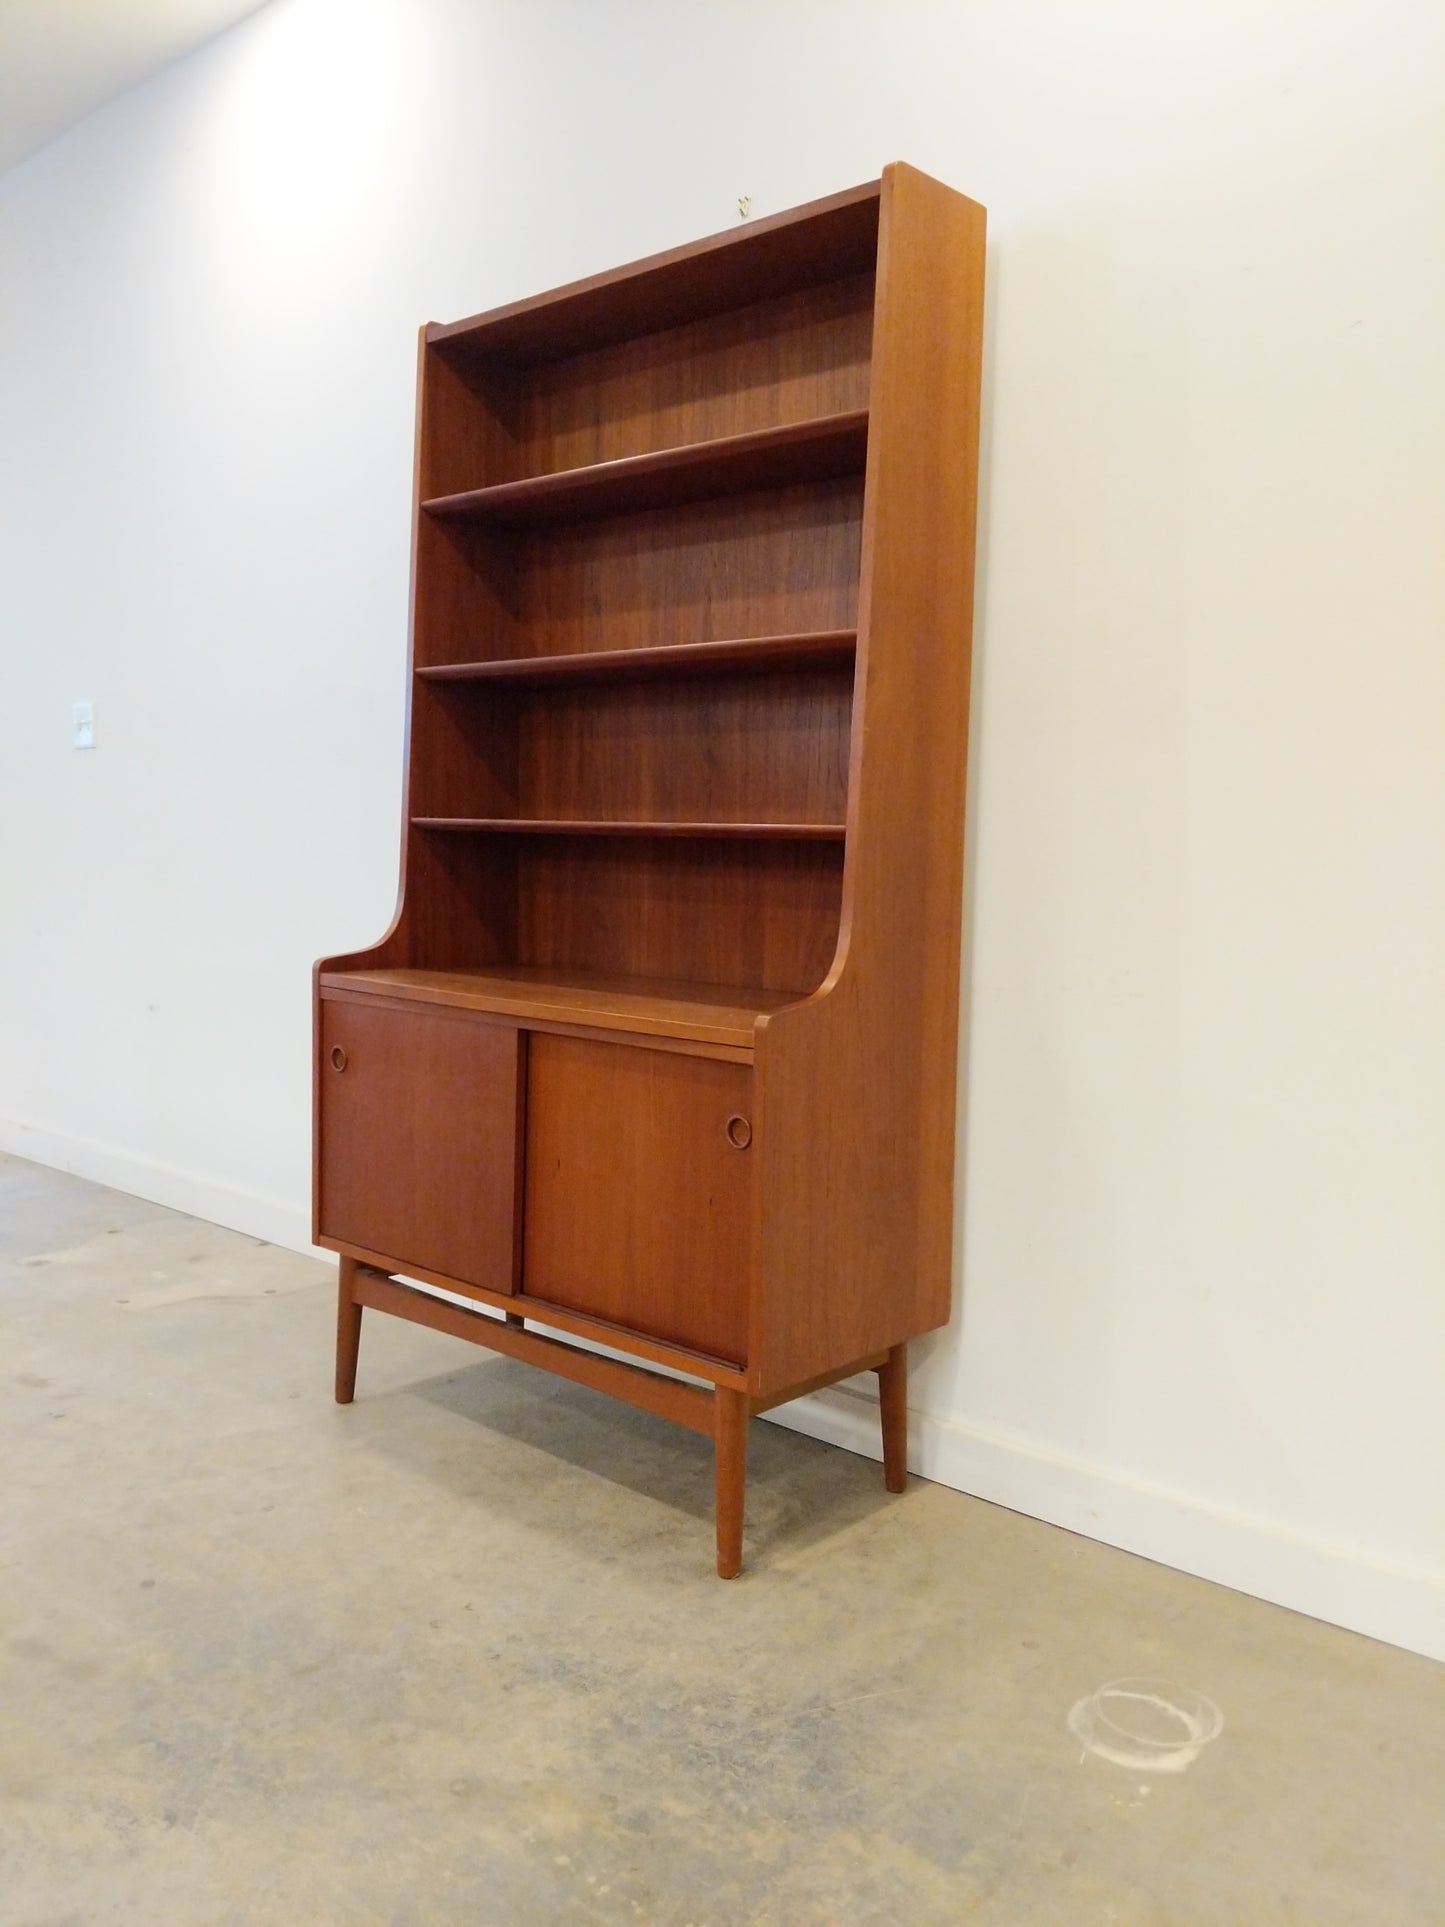 RESERVED - Vintage Danish Modern Teak Bookshelf / Cabinet